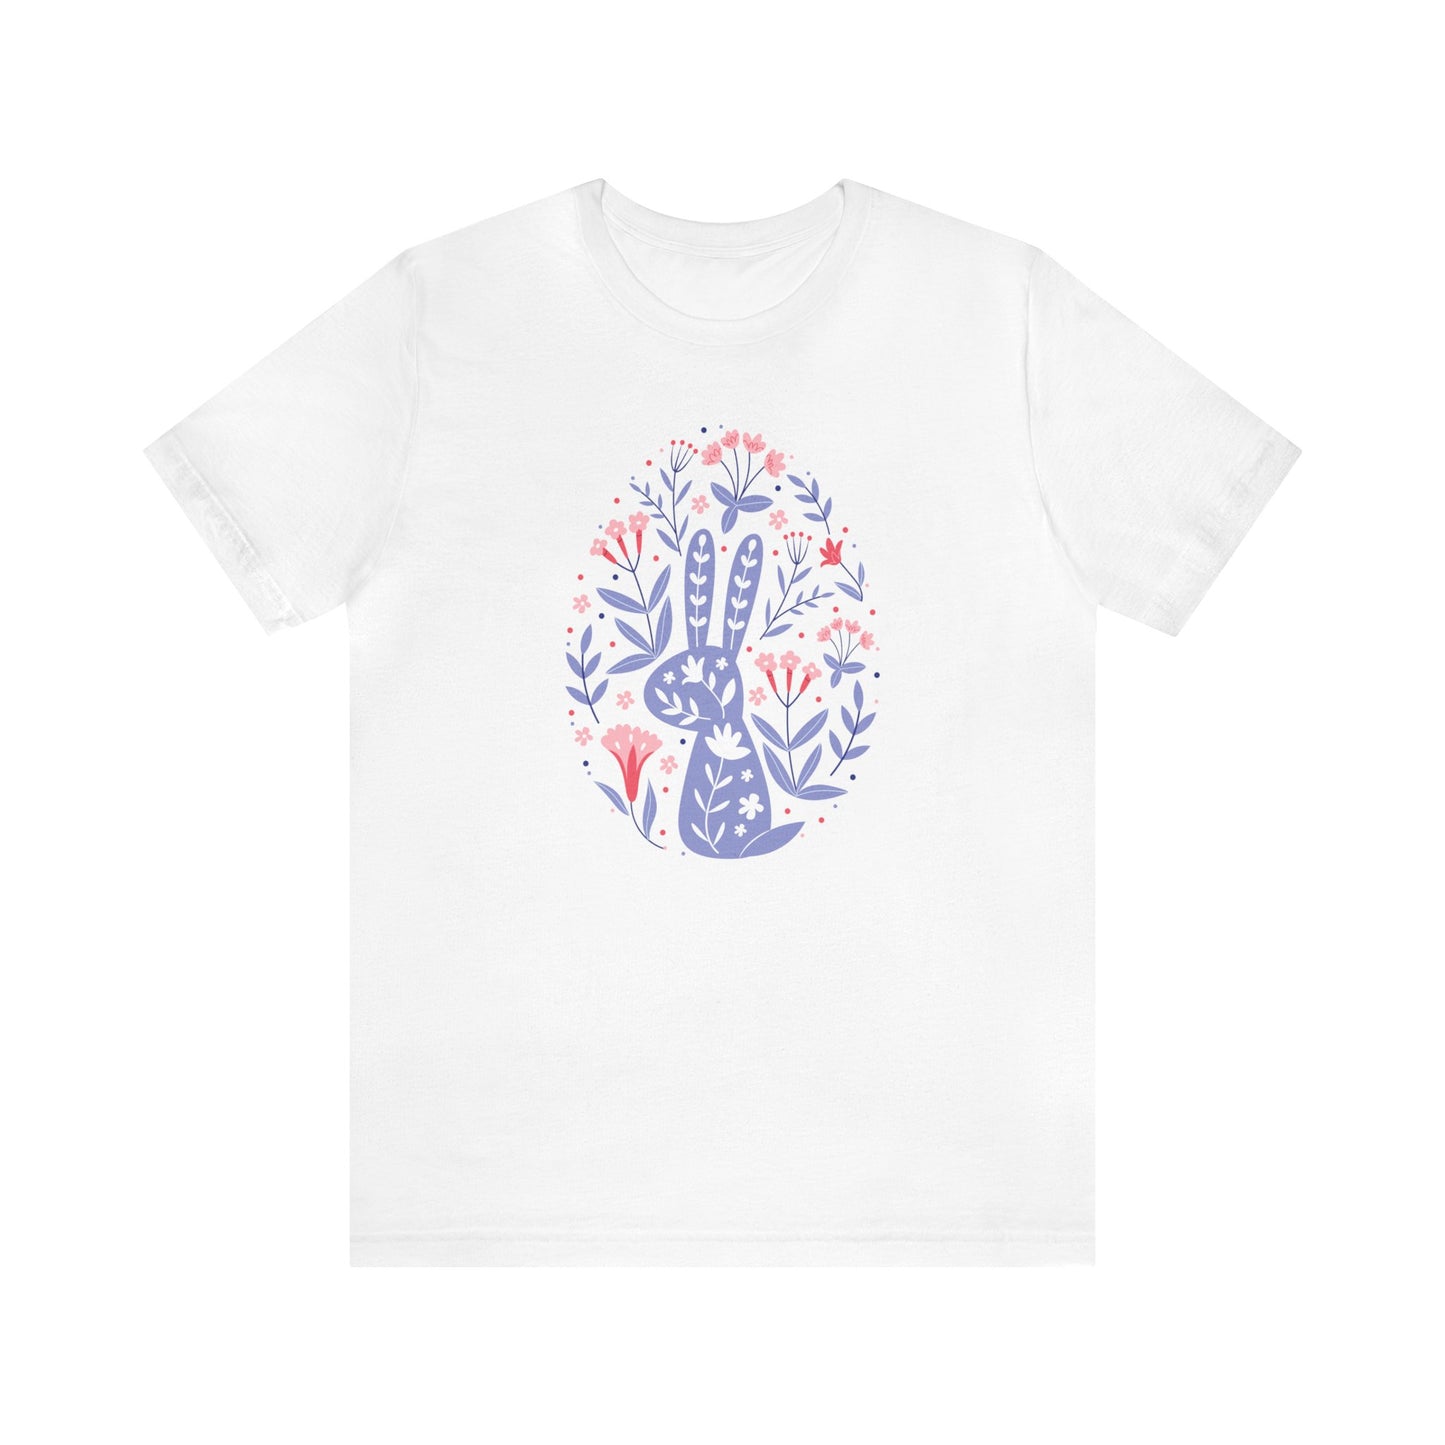 Flowery Bunny T-Shirt For Egg Shape T Shirt For Easter TShirt